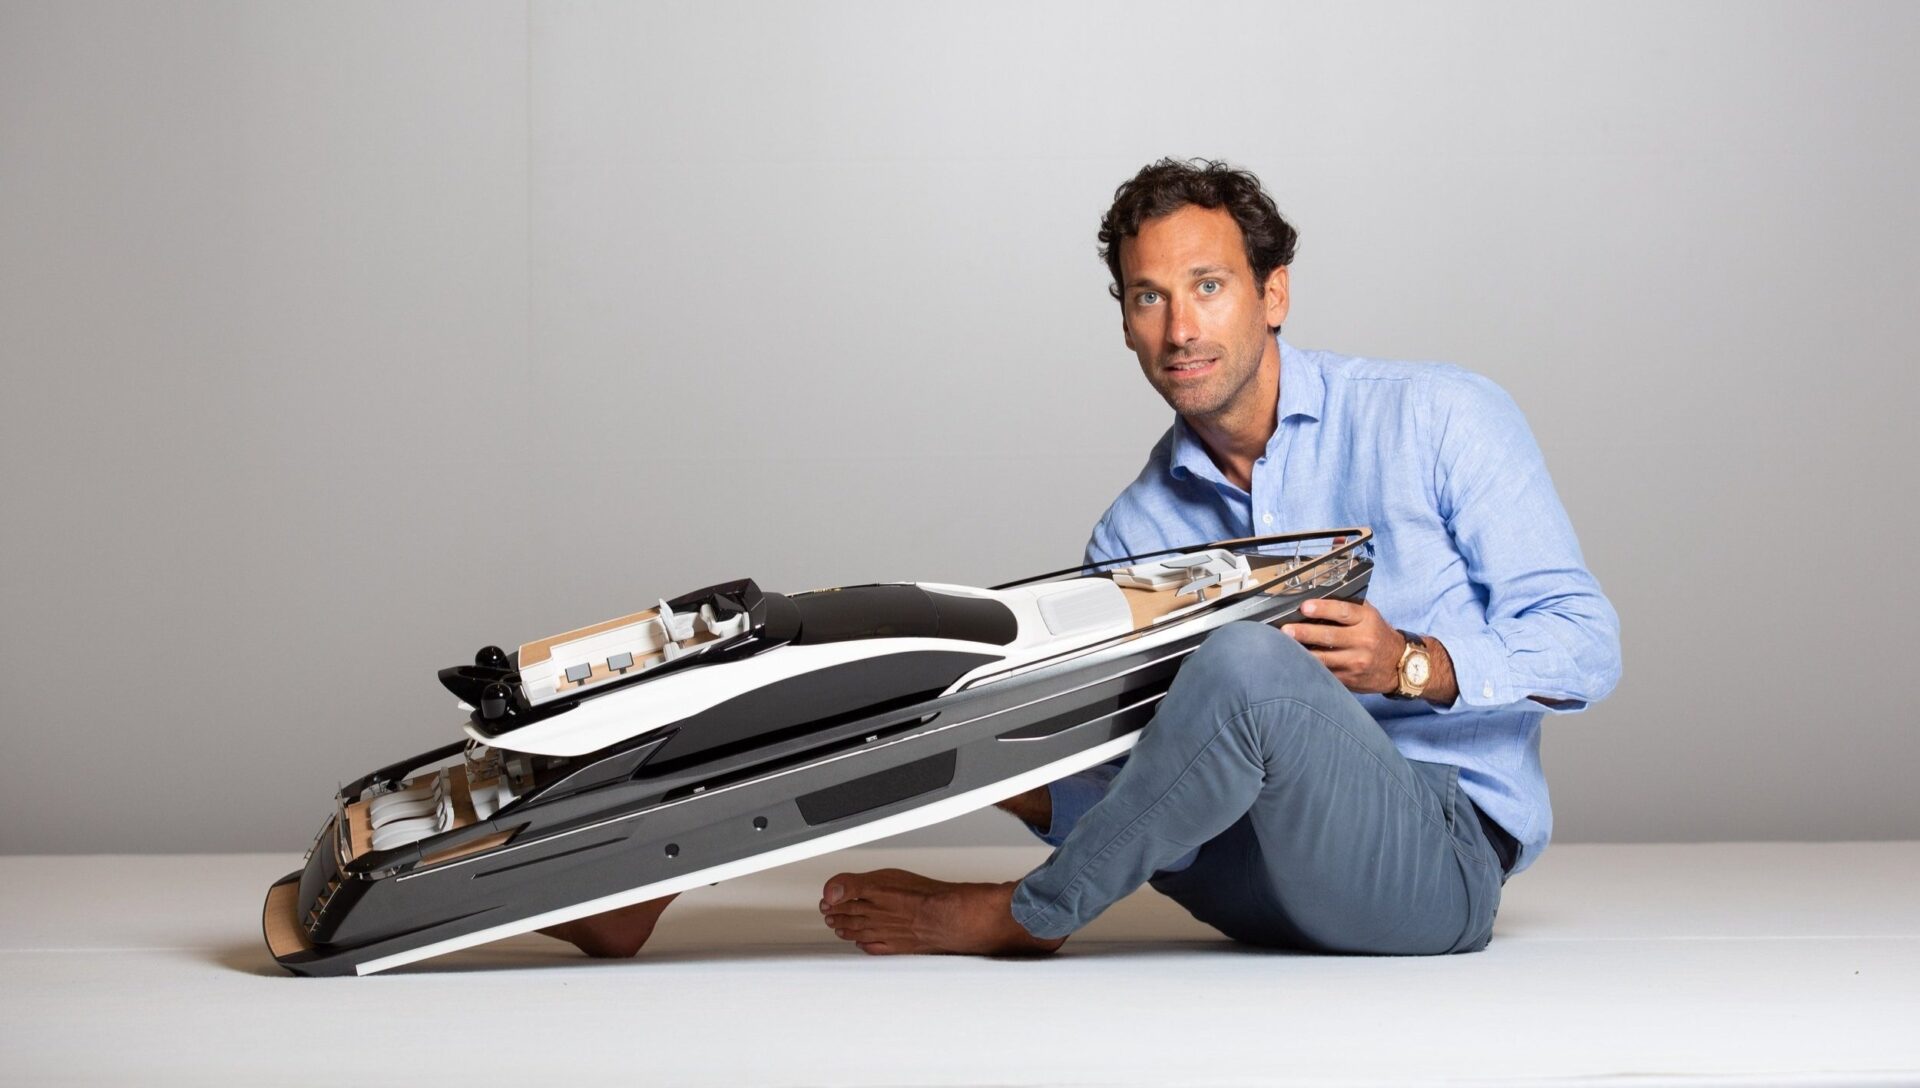 Alberto Mancini Yacht's Designer